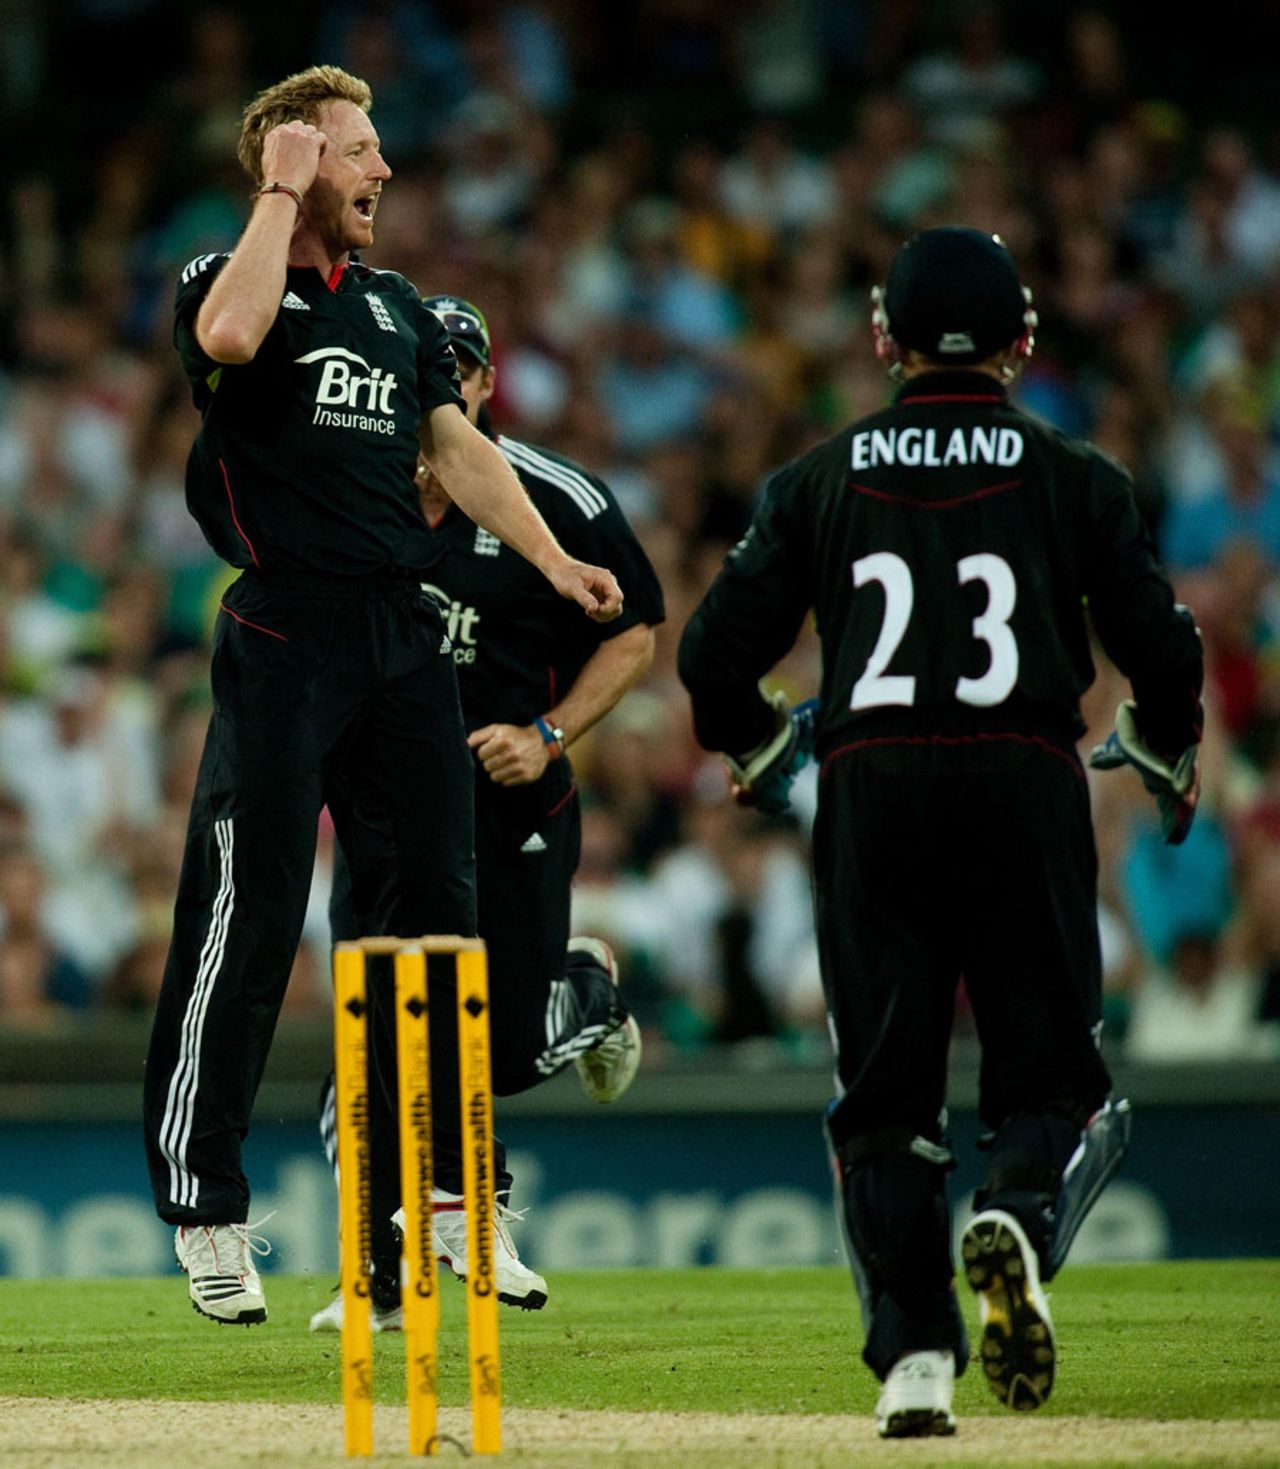 Paul Collingwood celebrates a wicket, Australia v England, 3rd ODI, Sydney, January 23, 2011